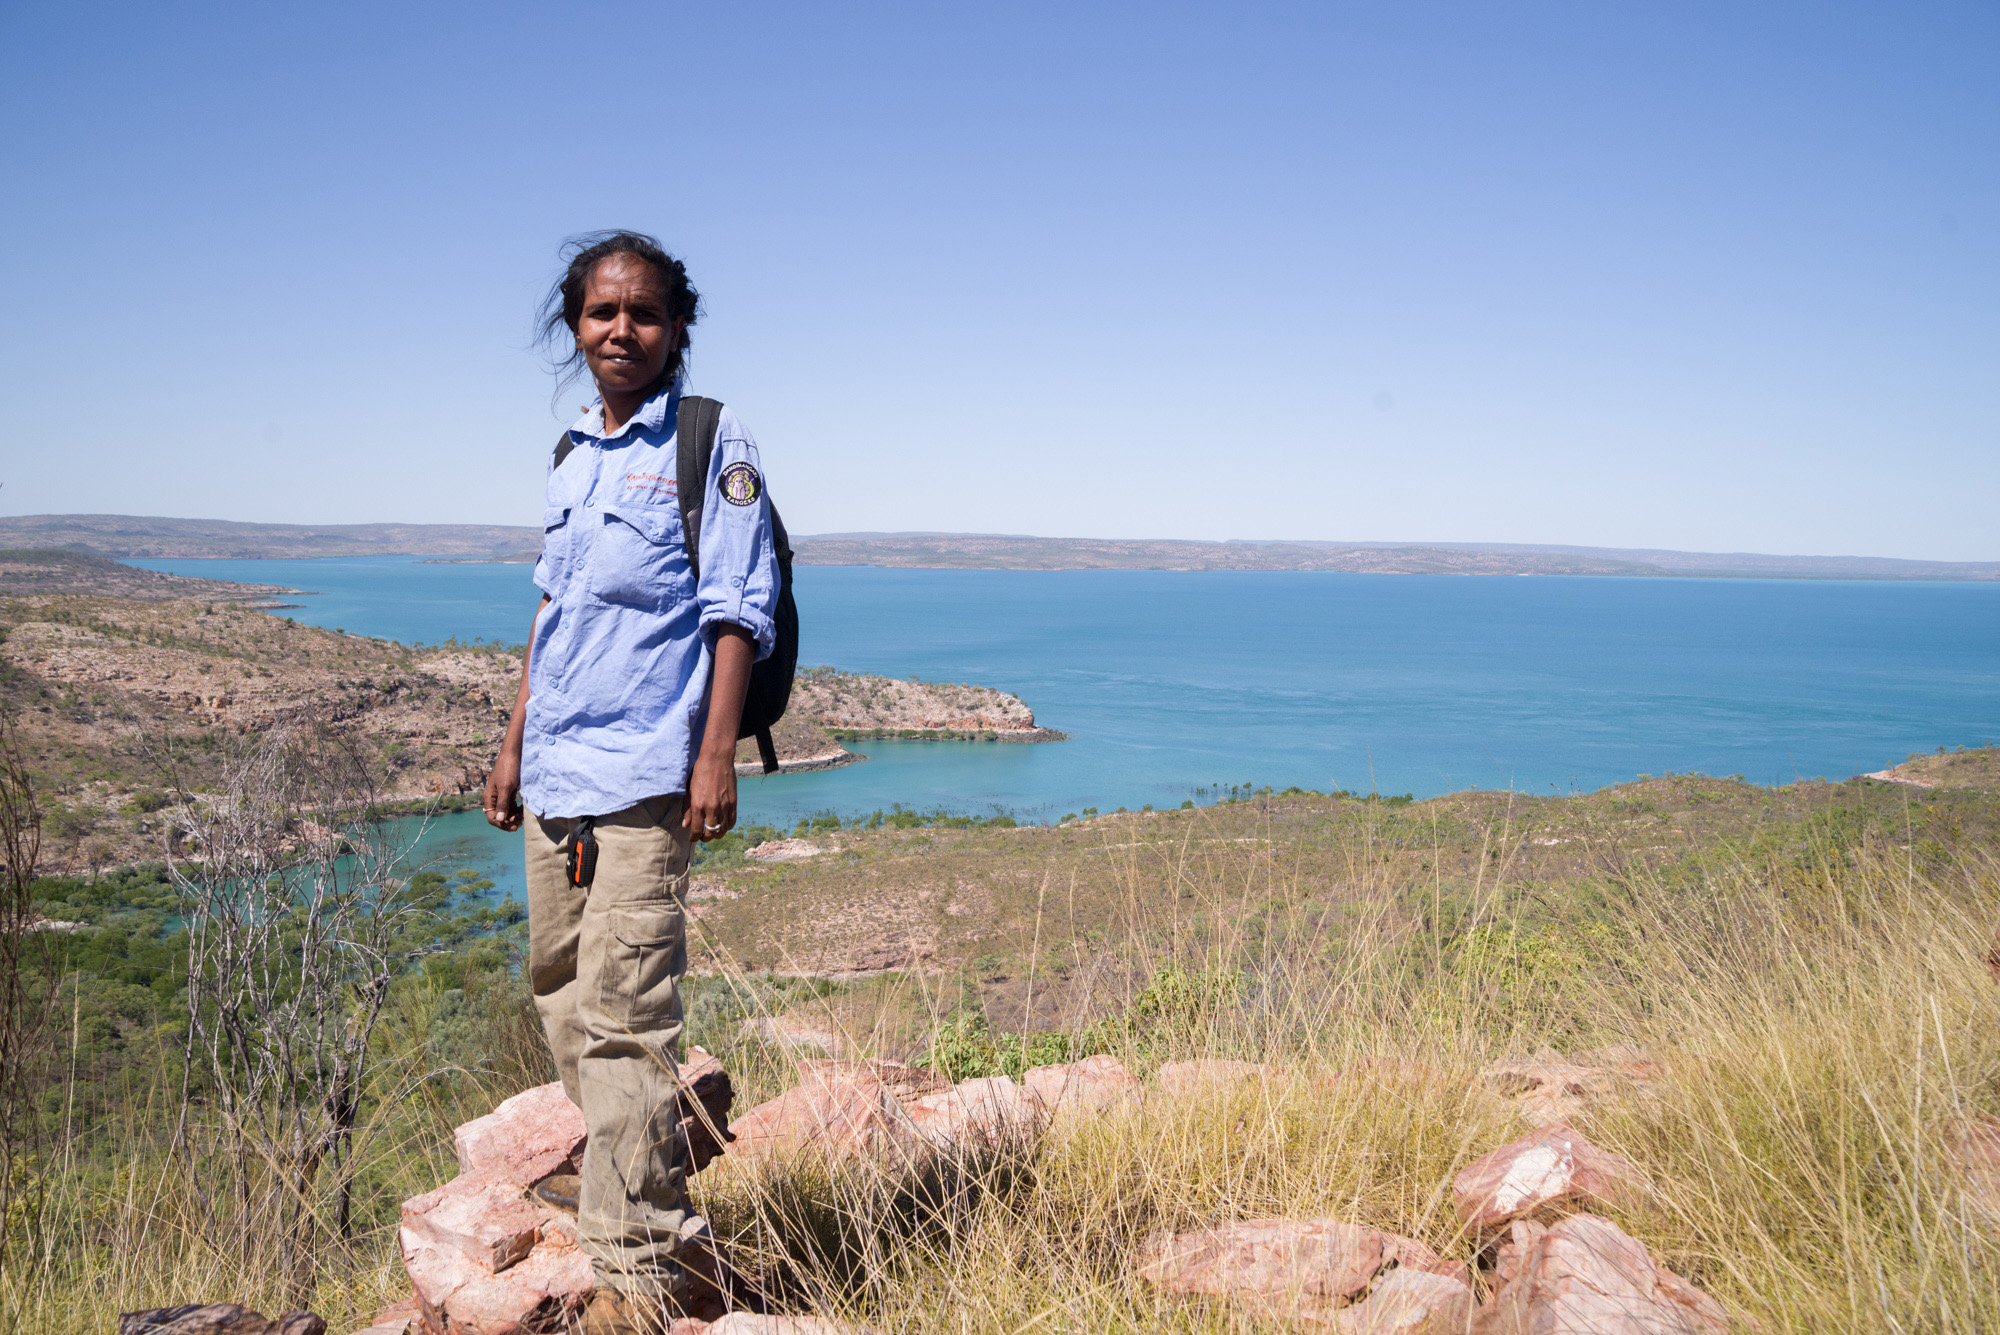 Azarnia On Dambimangari Country During Biodiversity Surveys